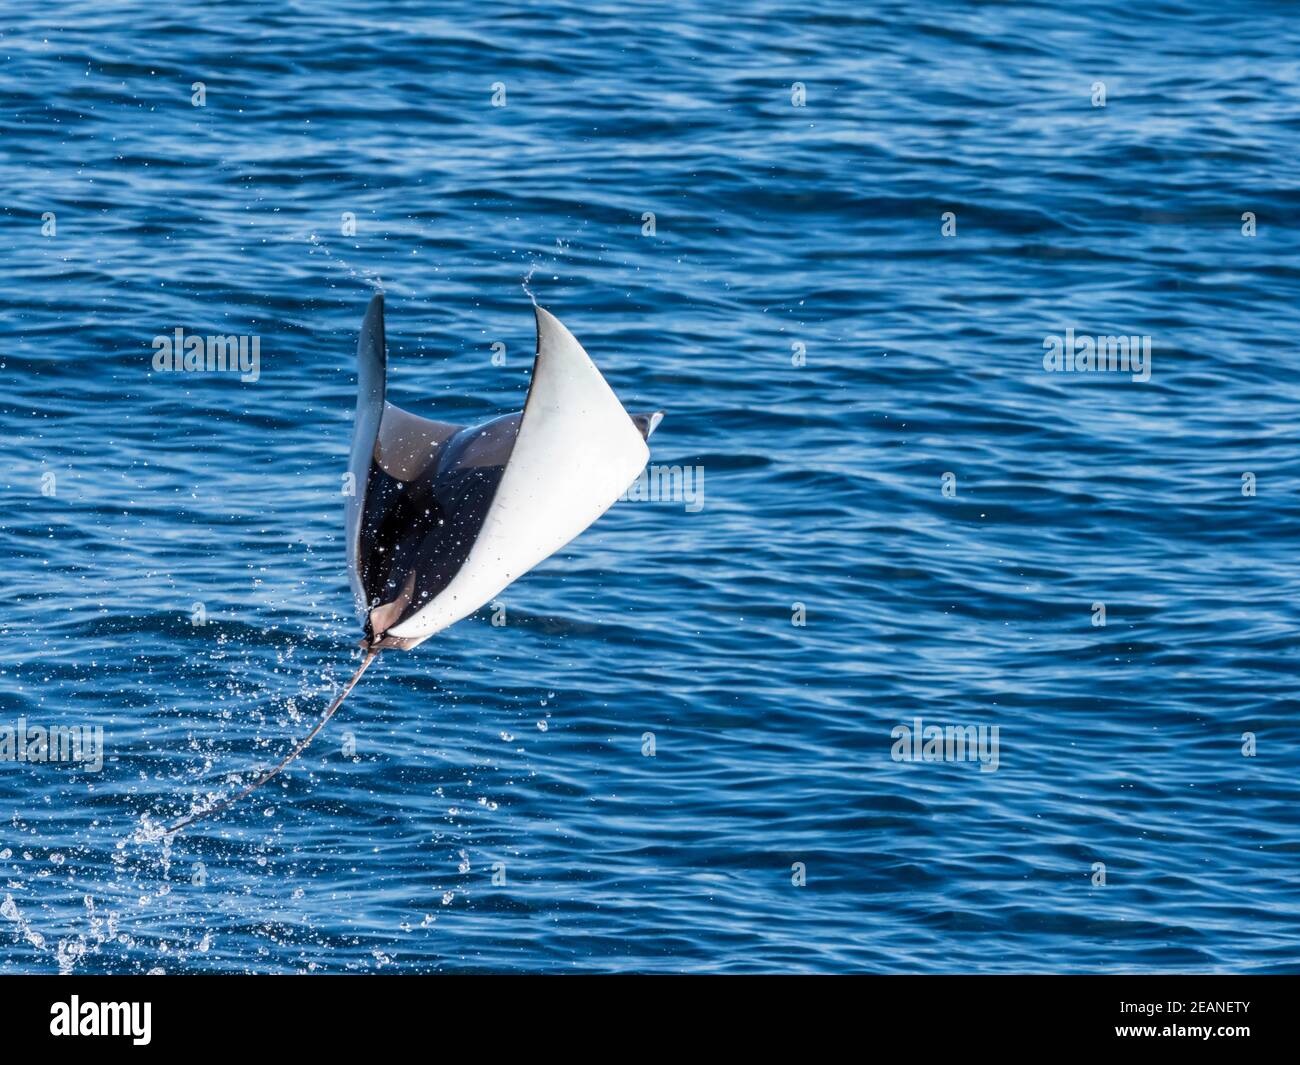 Adult Munk's pygmy devil ray (Mobula munkiana), leaping into the air, Isla San Jose, Baja California Sur, Mexico, North America Stock Photo